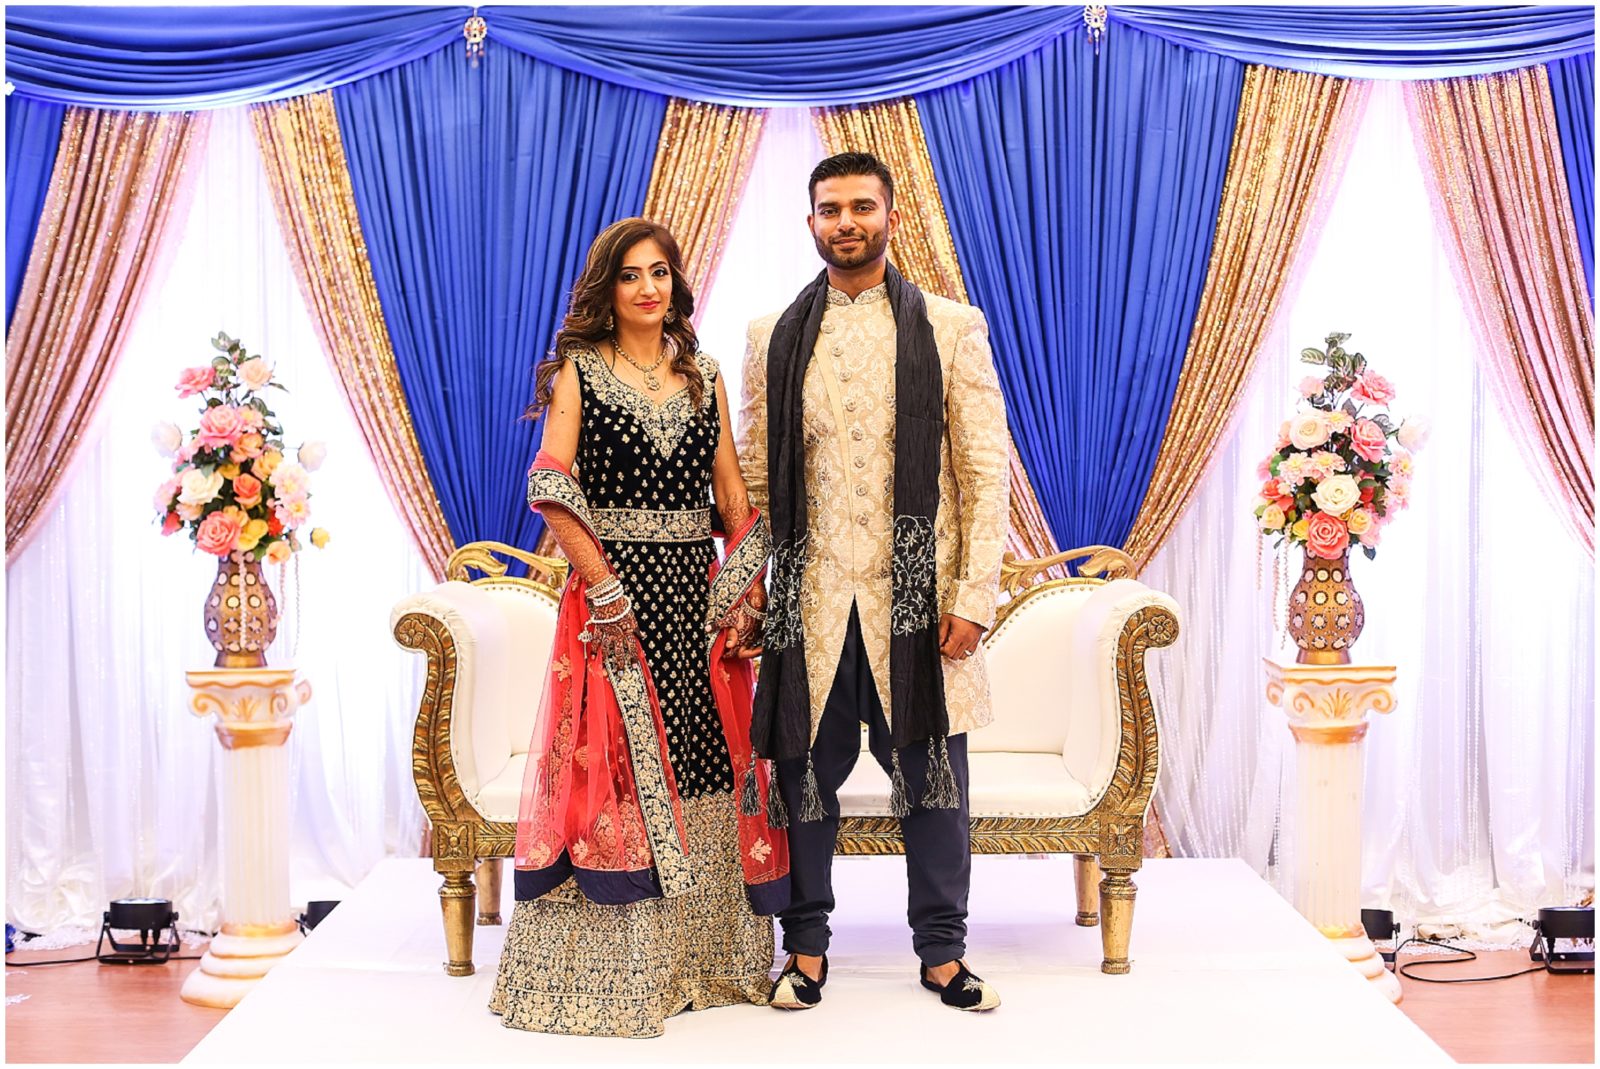 OLATHE WEDDING PHOTOGRAPHER - INDIAN WEDDING 